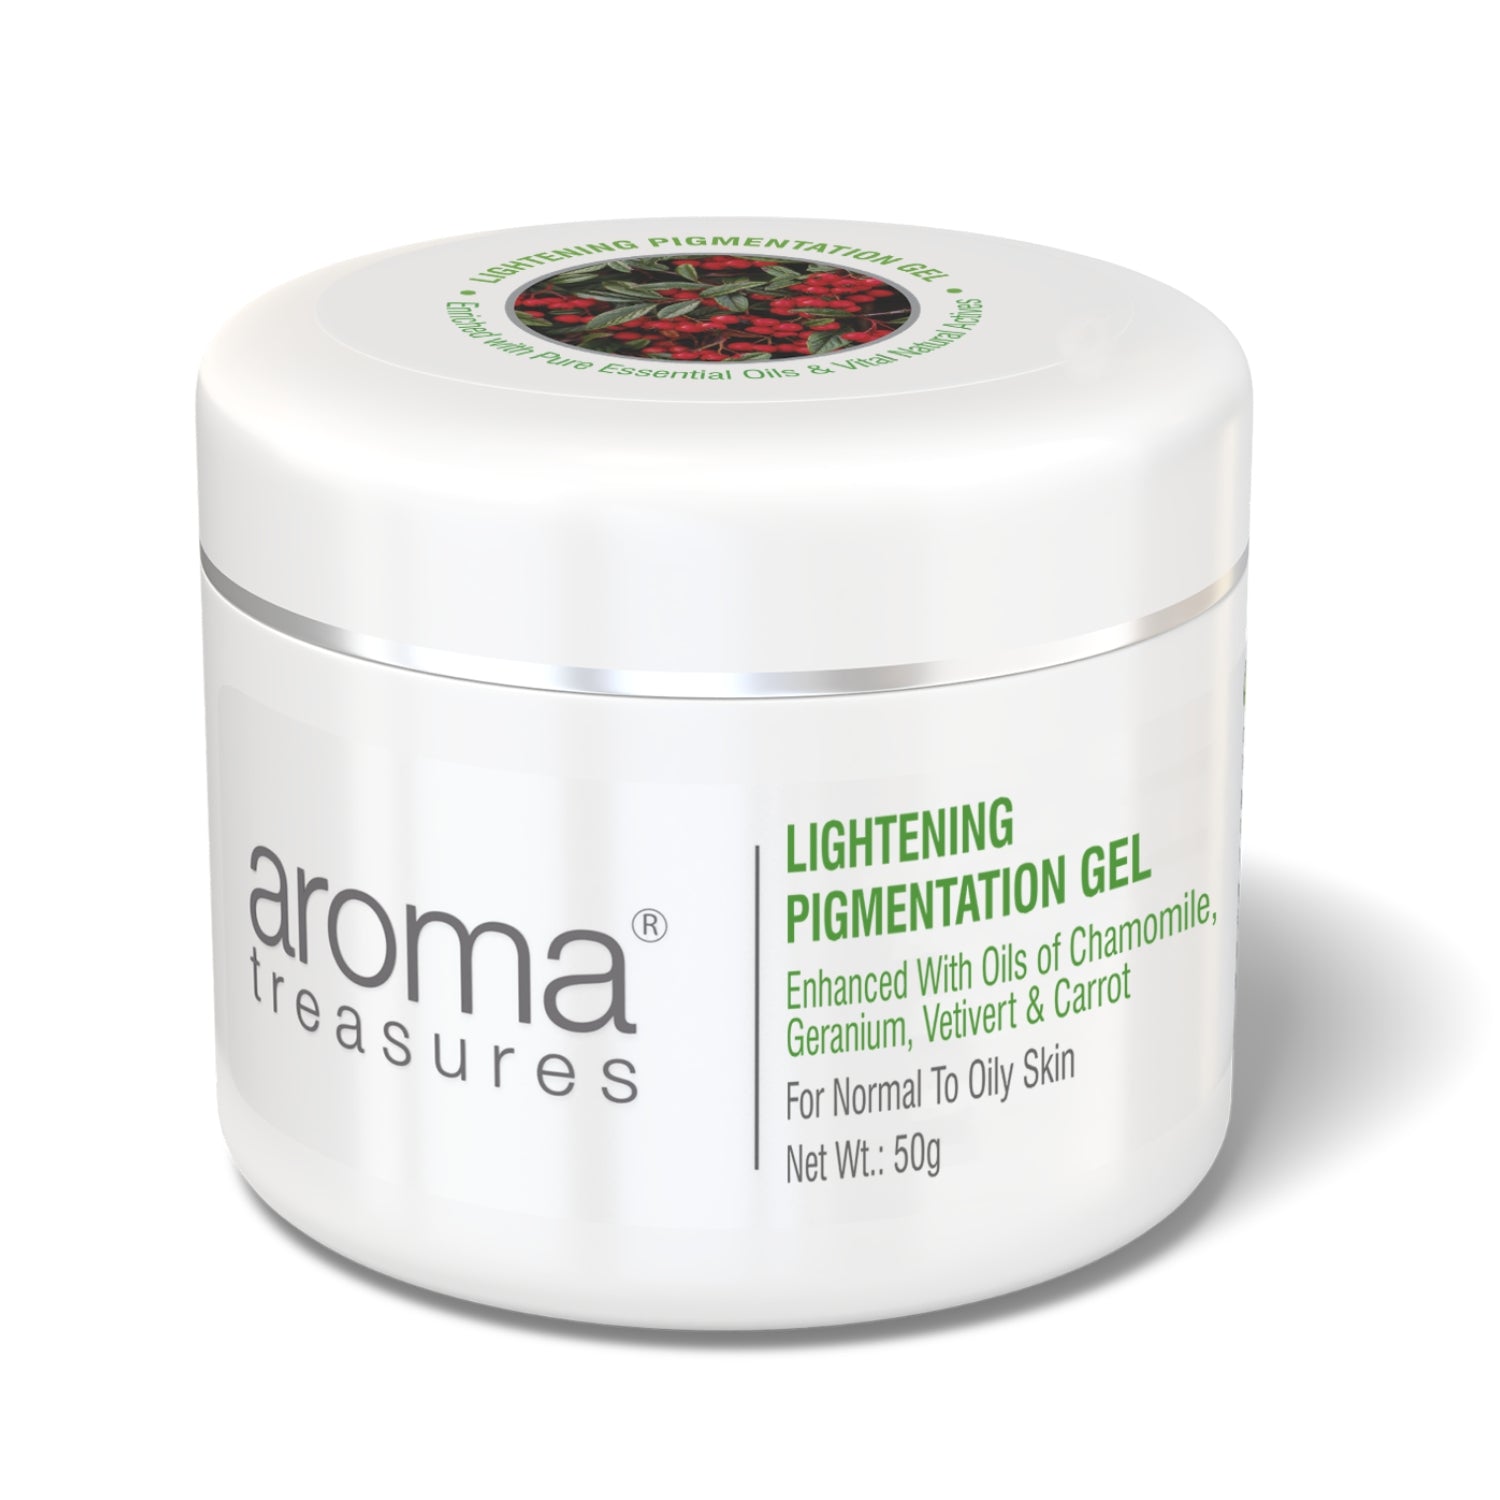 Aroma Treasures Lightening Pigmentation Gel 50 gm